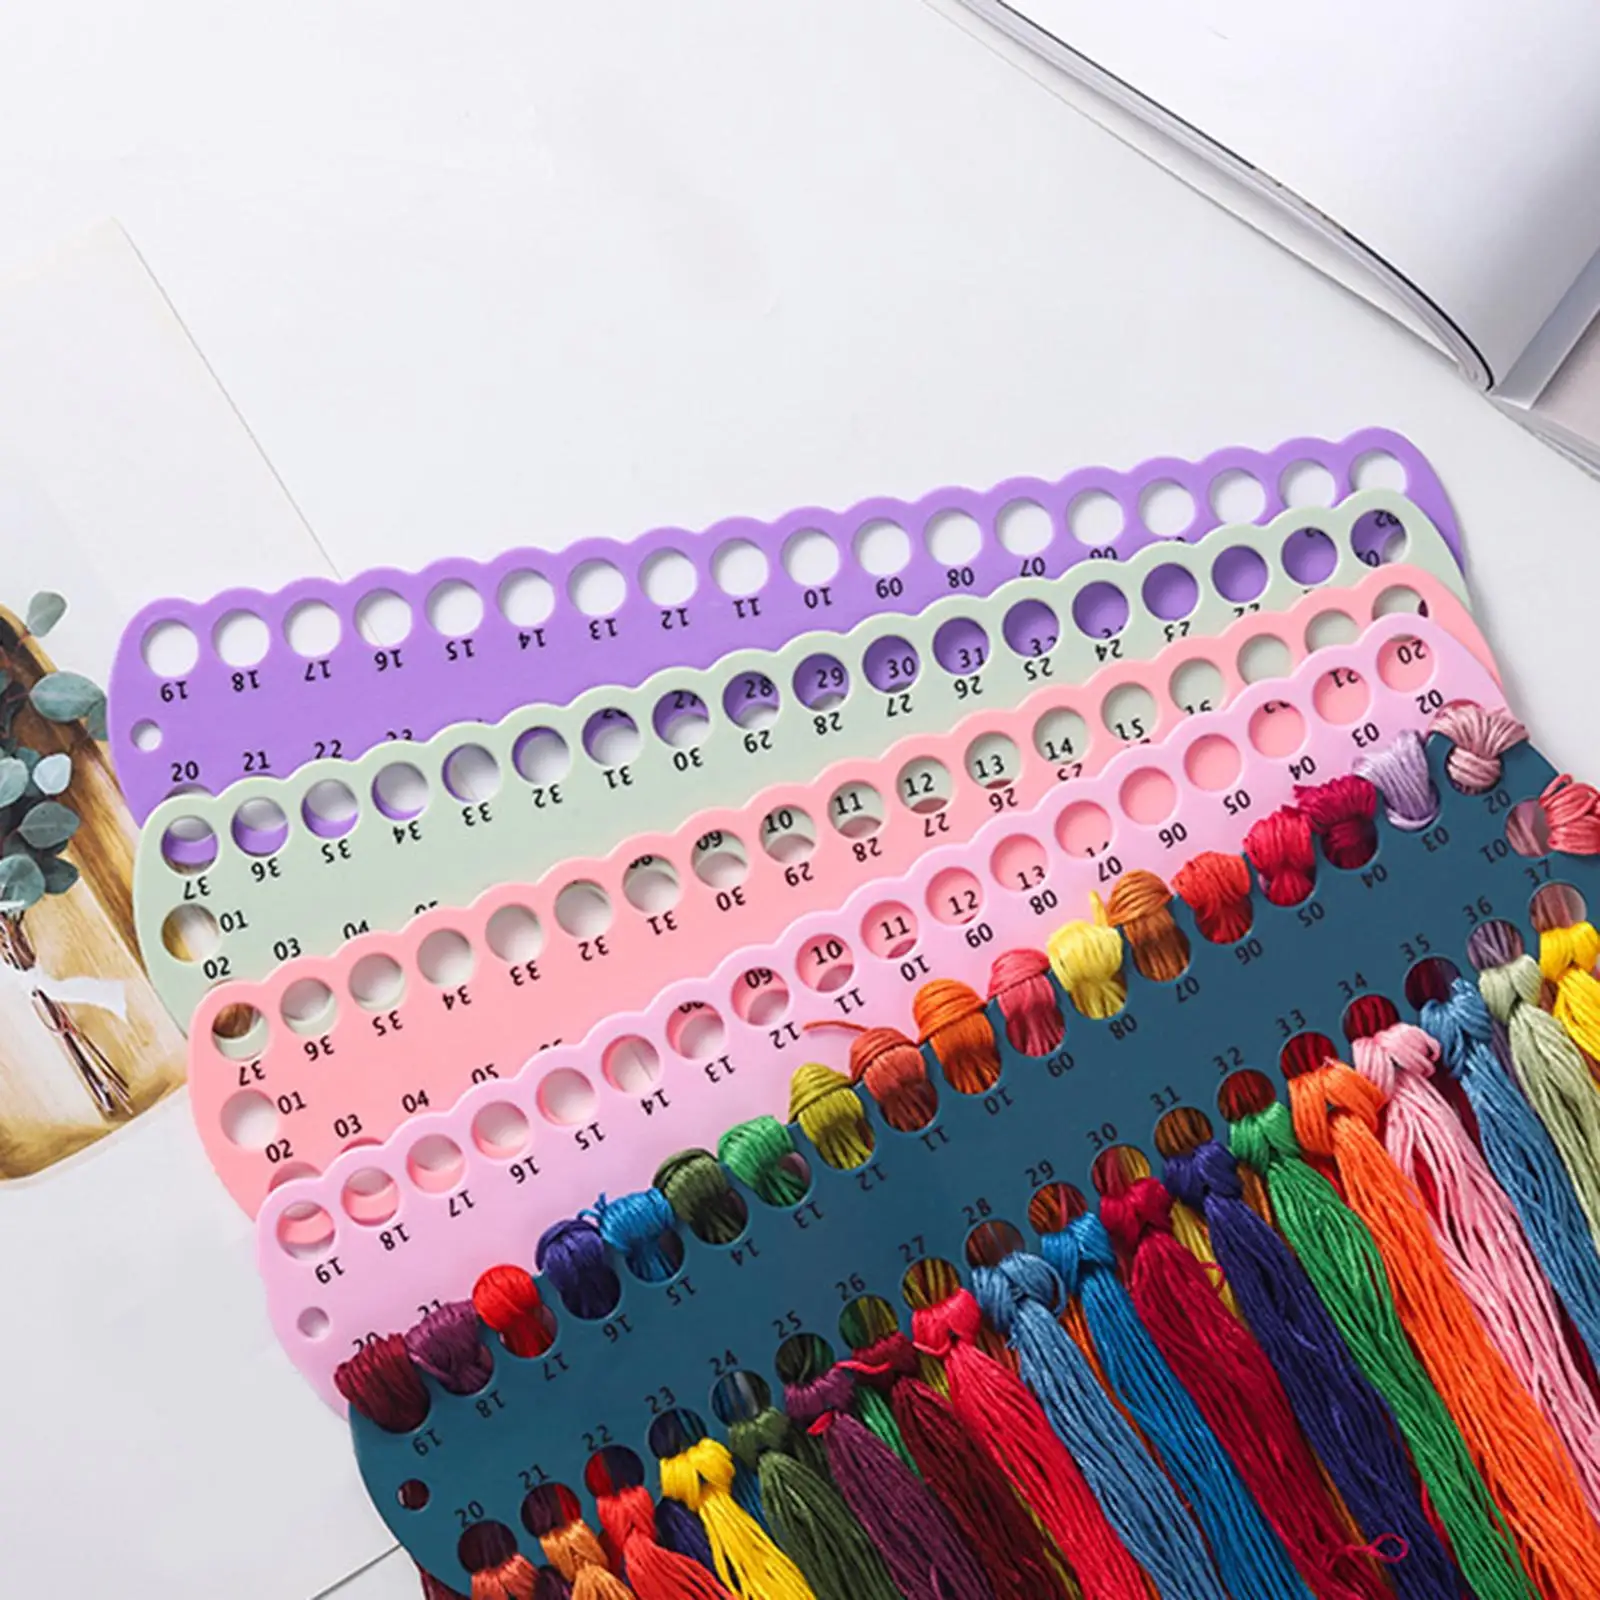 Embroidery Floss Organizer, Embroidery Organizer Hanger Thread Storage Tool